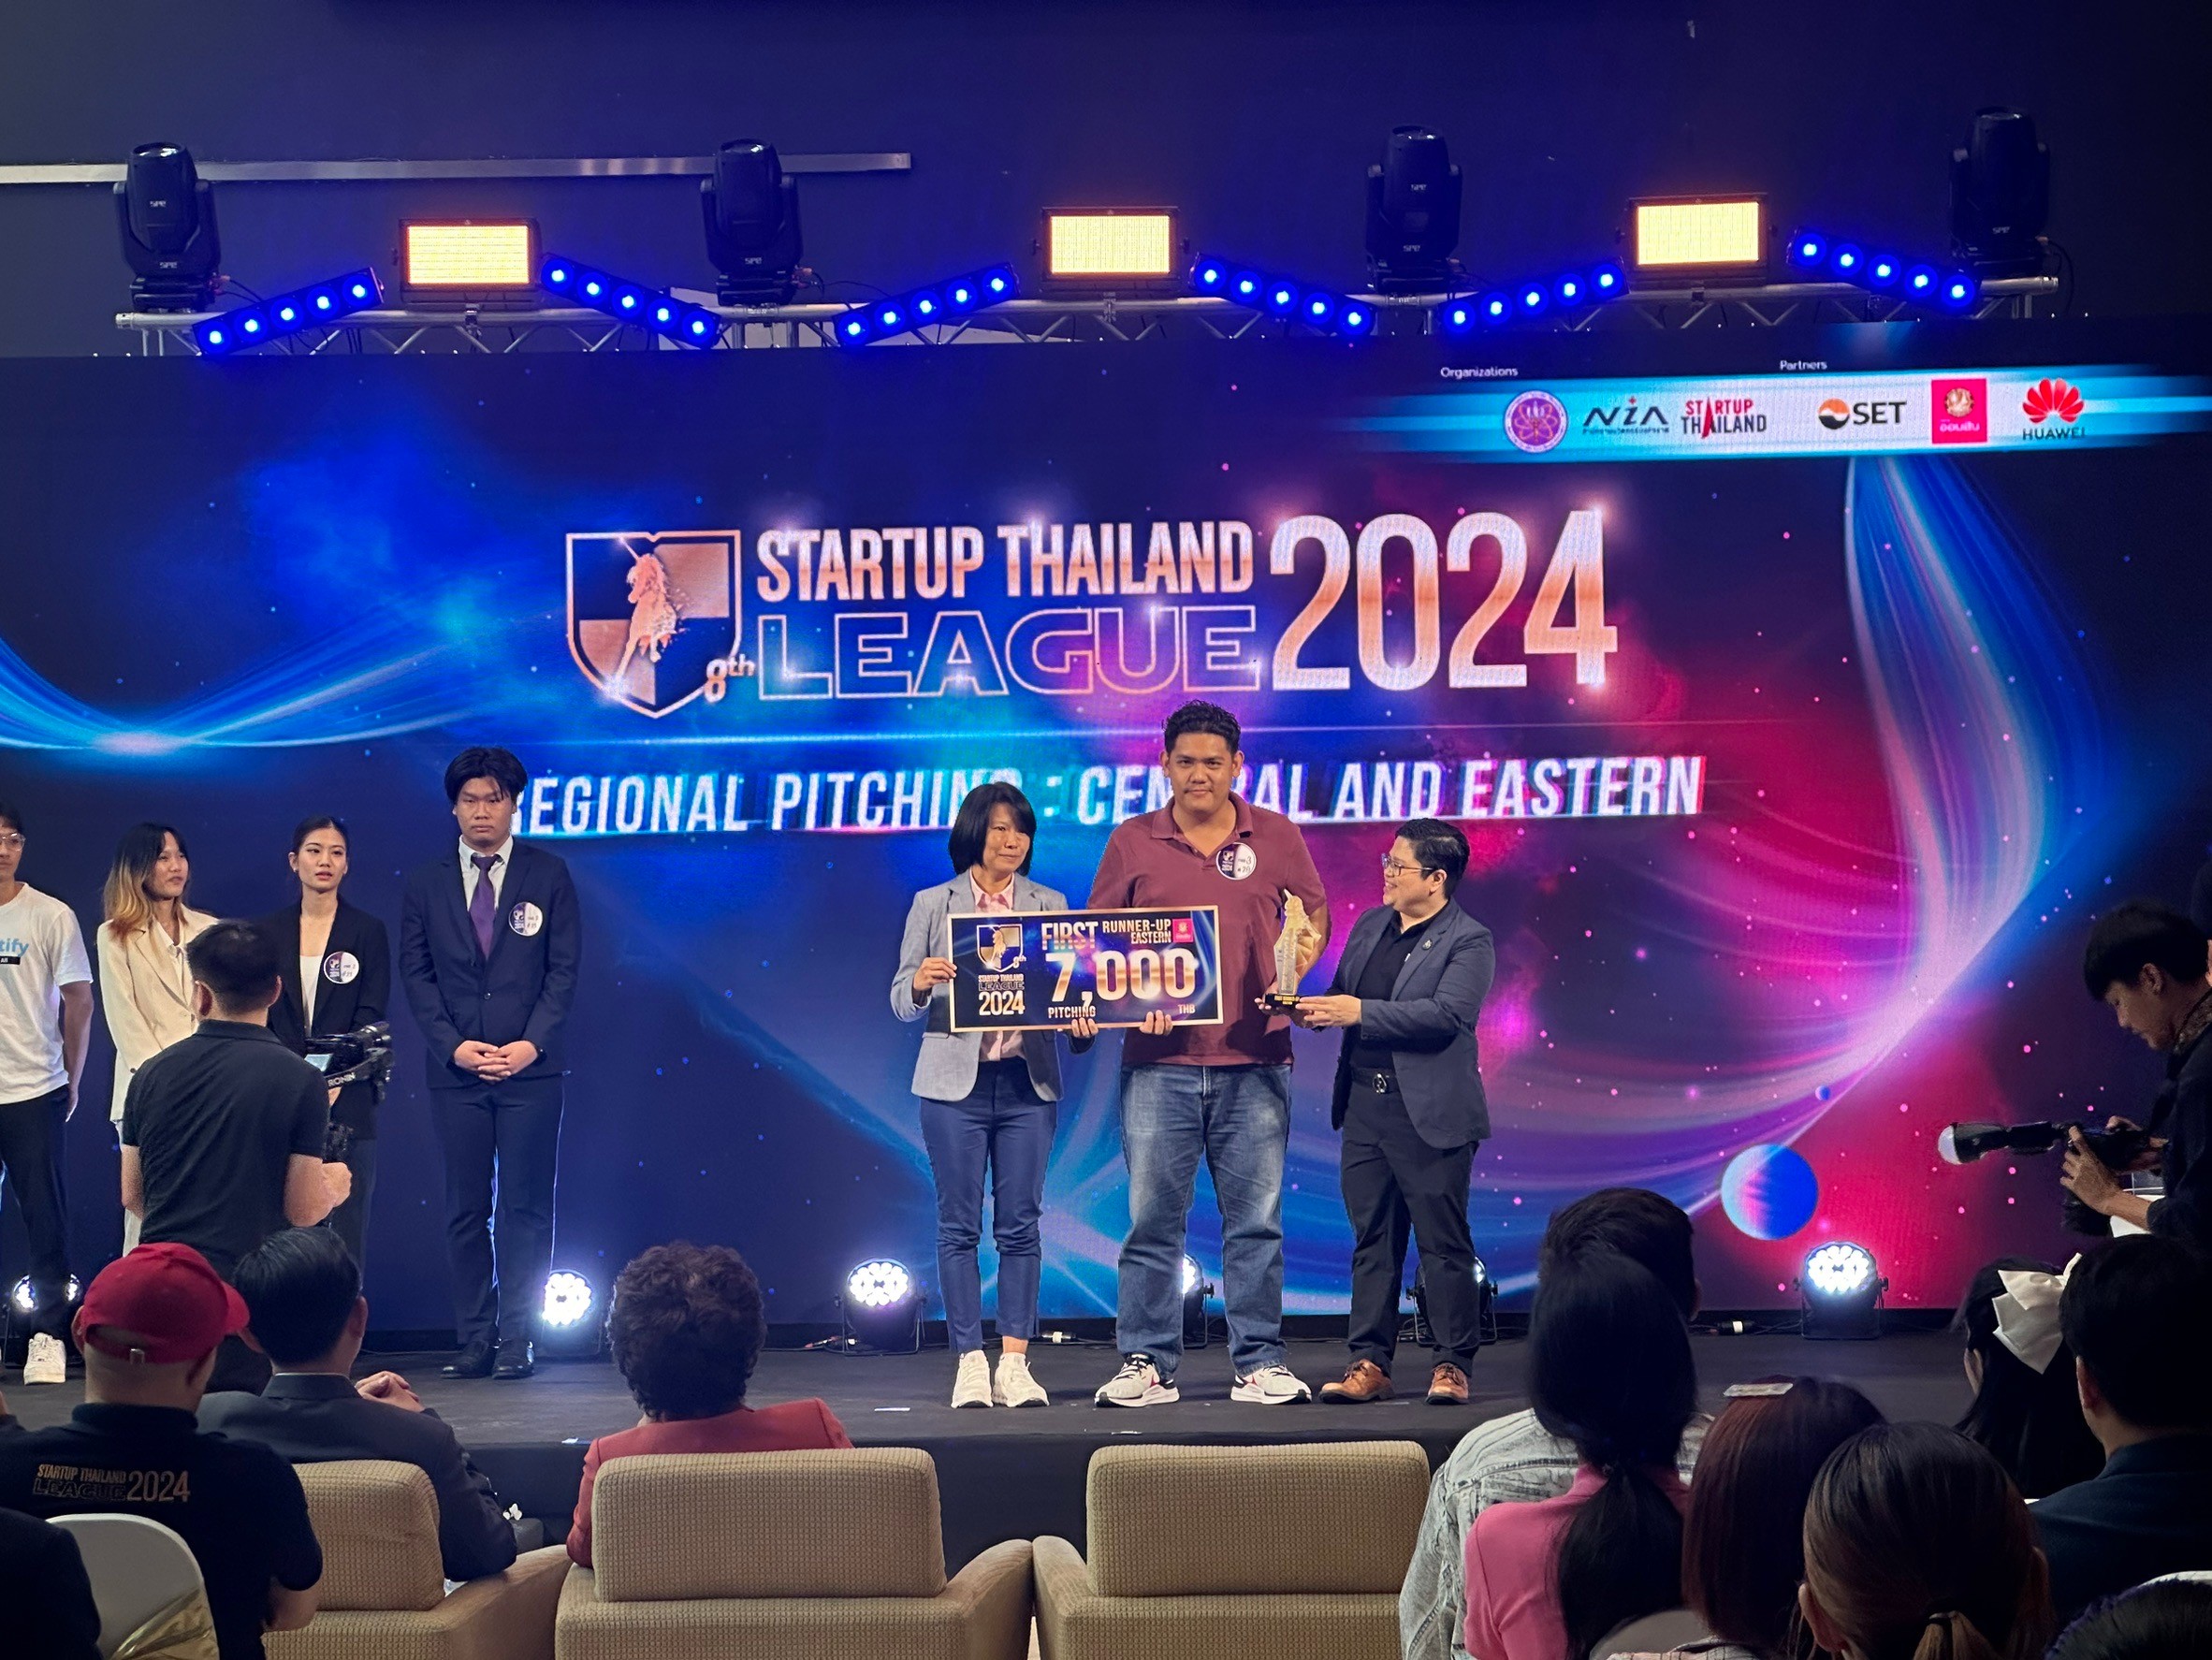 Startup Thailand League 2024